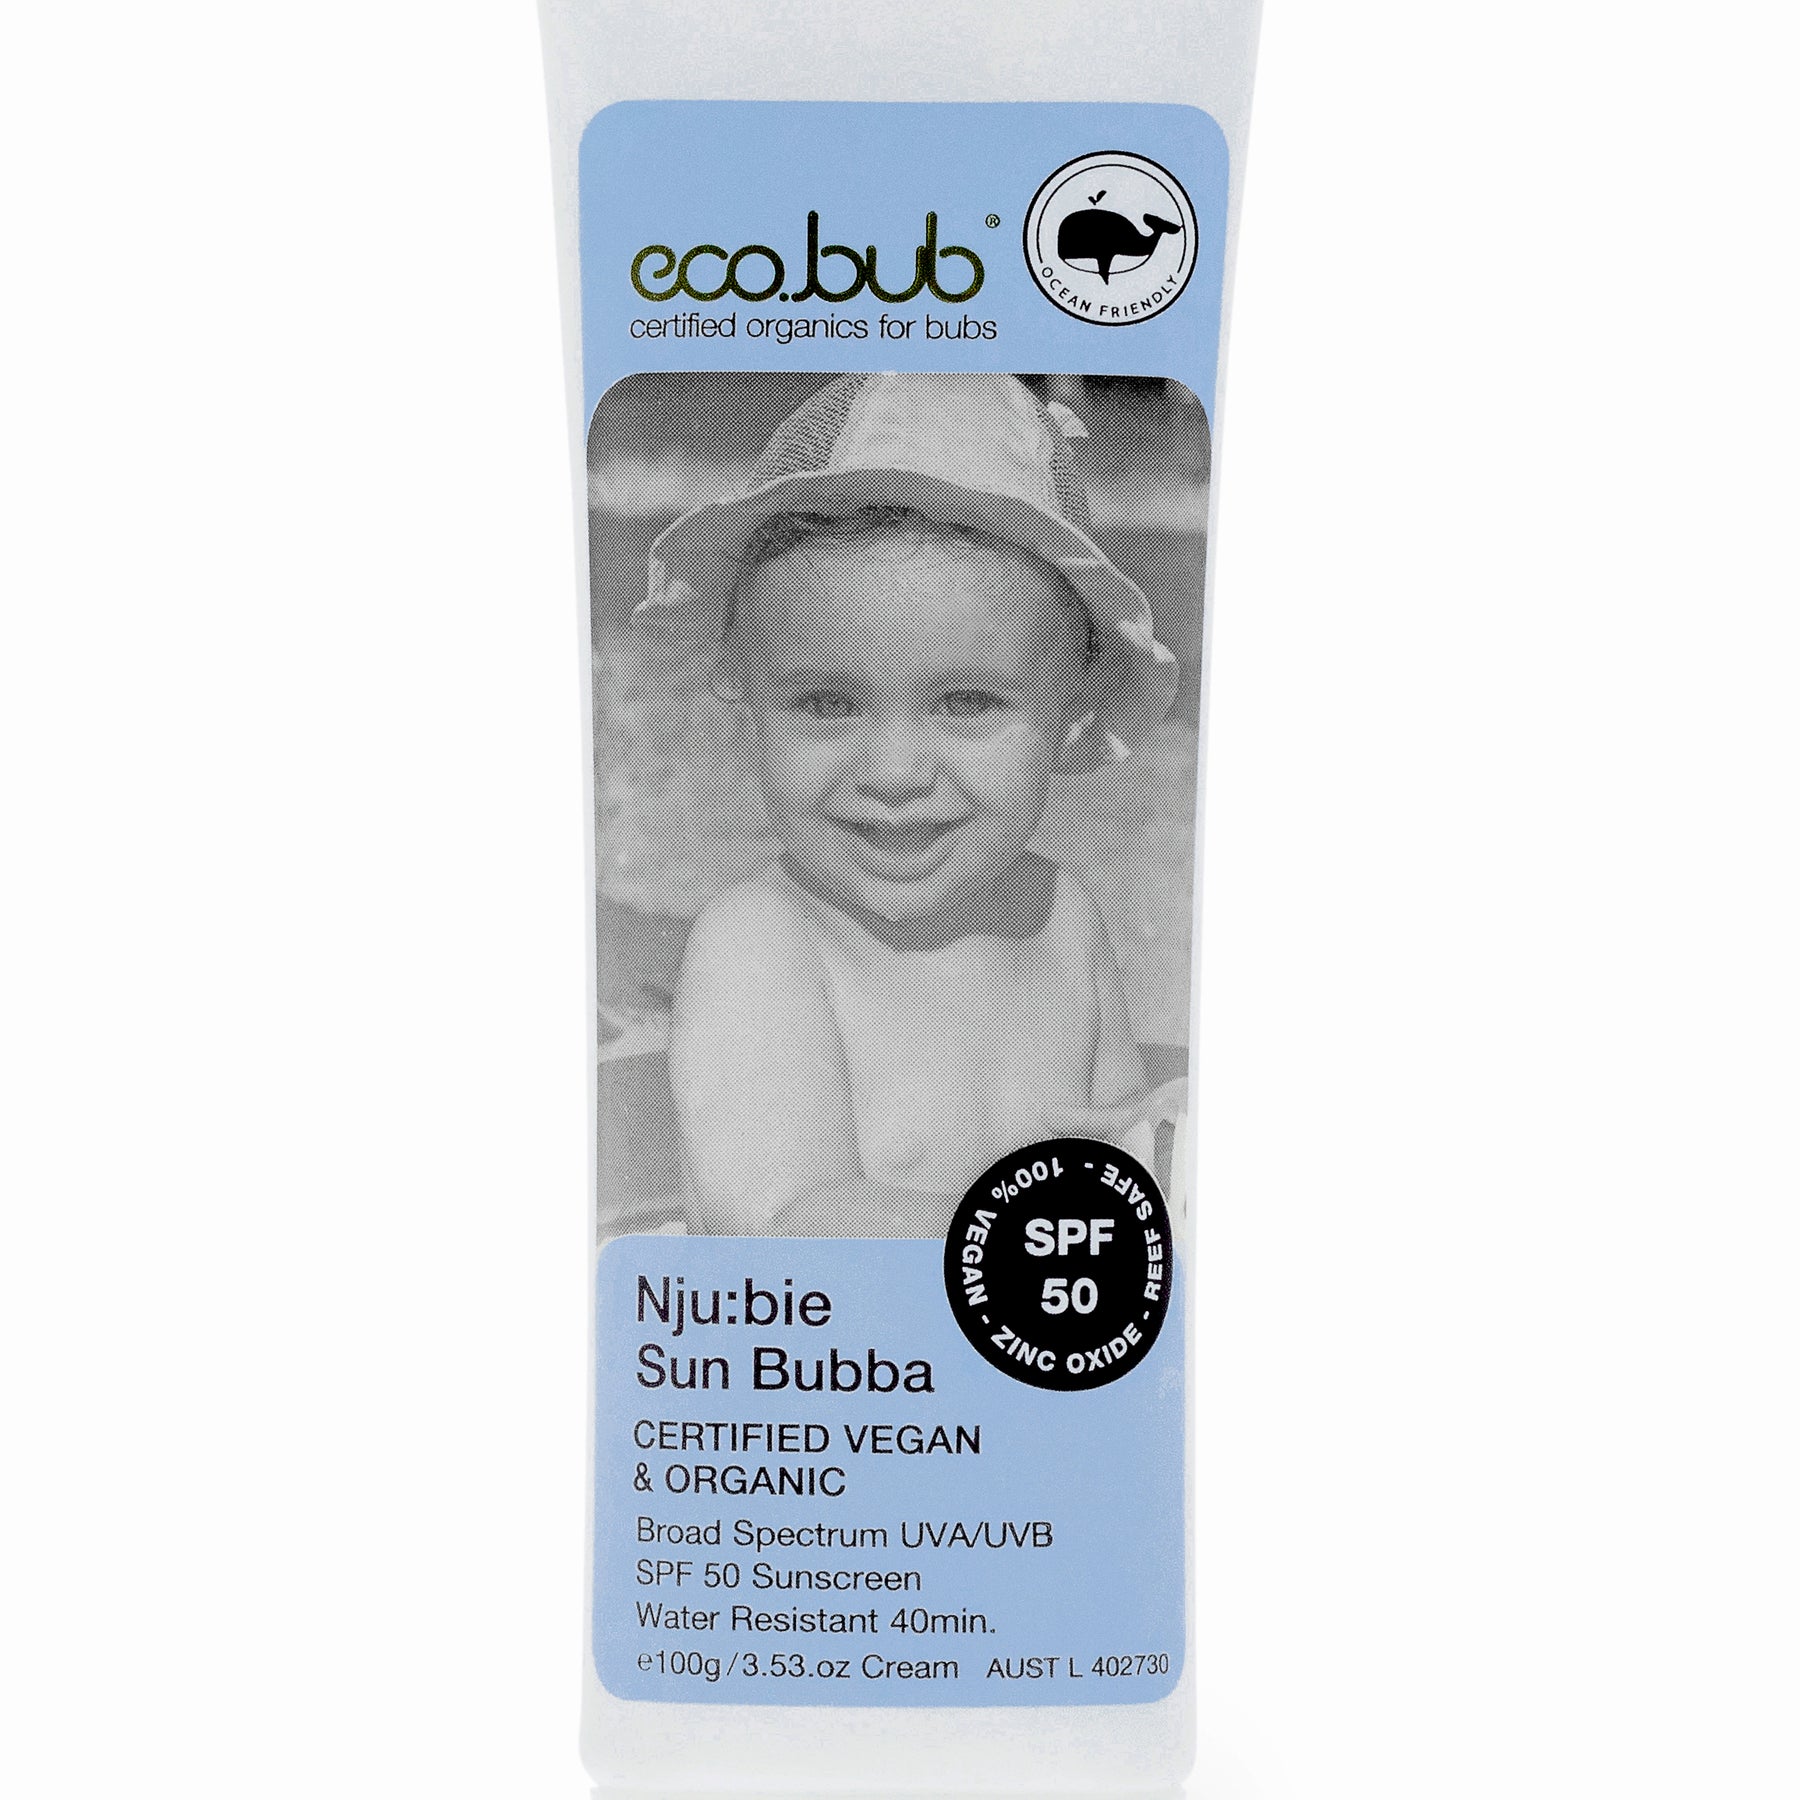 Eco.bub Nju:bie Sun Bubba Certified Vegan & Organic Sunscreen SPF50